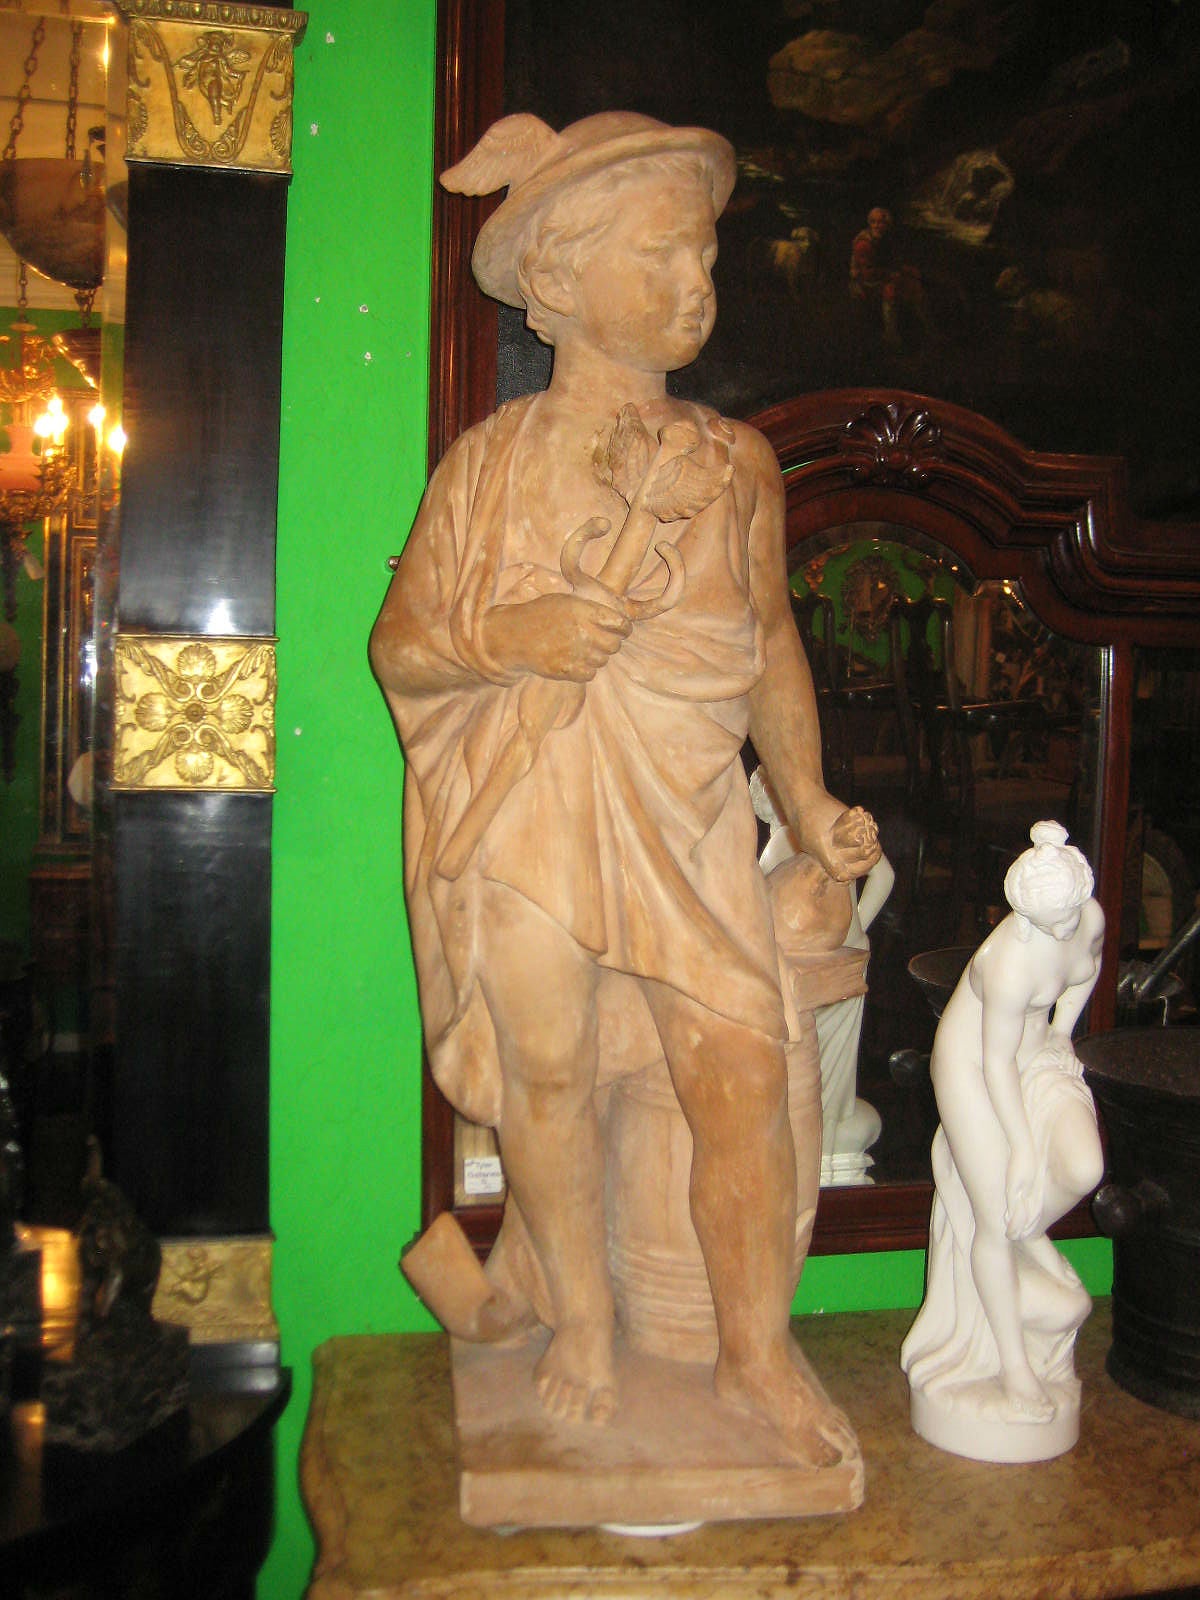 Terracotta figure of young Hermes / Mercury